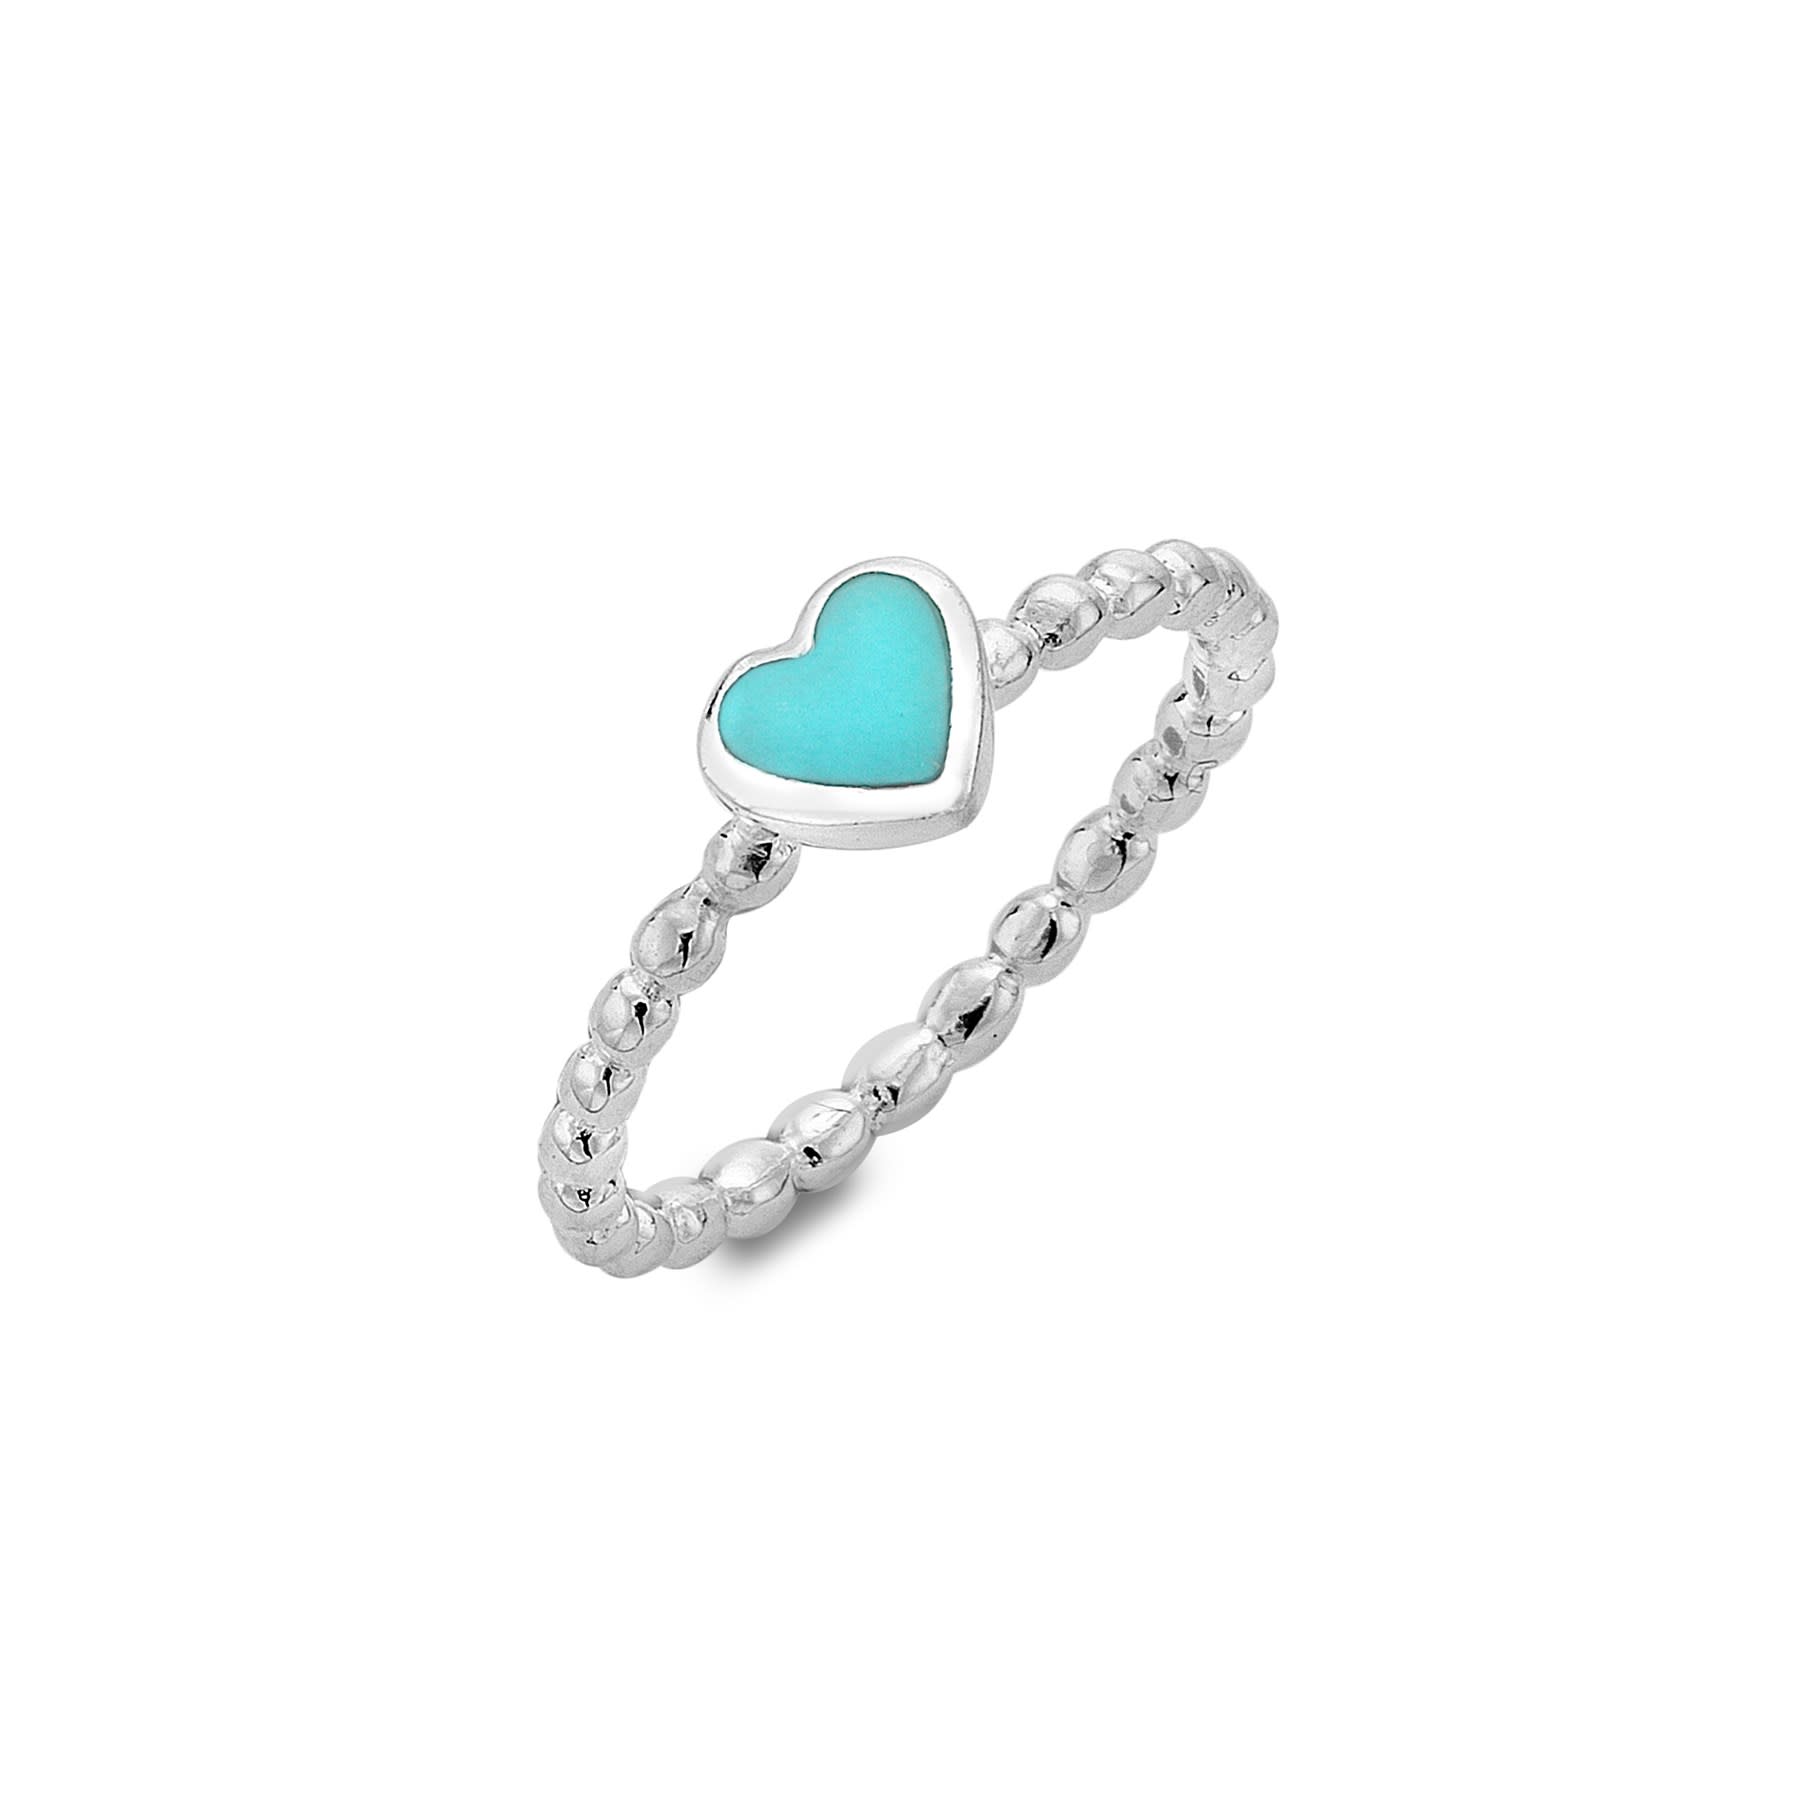 Beaded Turquoise Heart Ring - The Nancy Smillie Shop - Art, Jewellery & Designer Gifts Glasgow